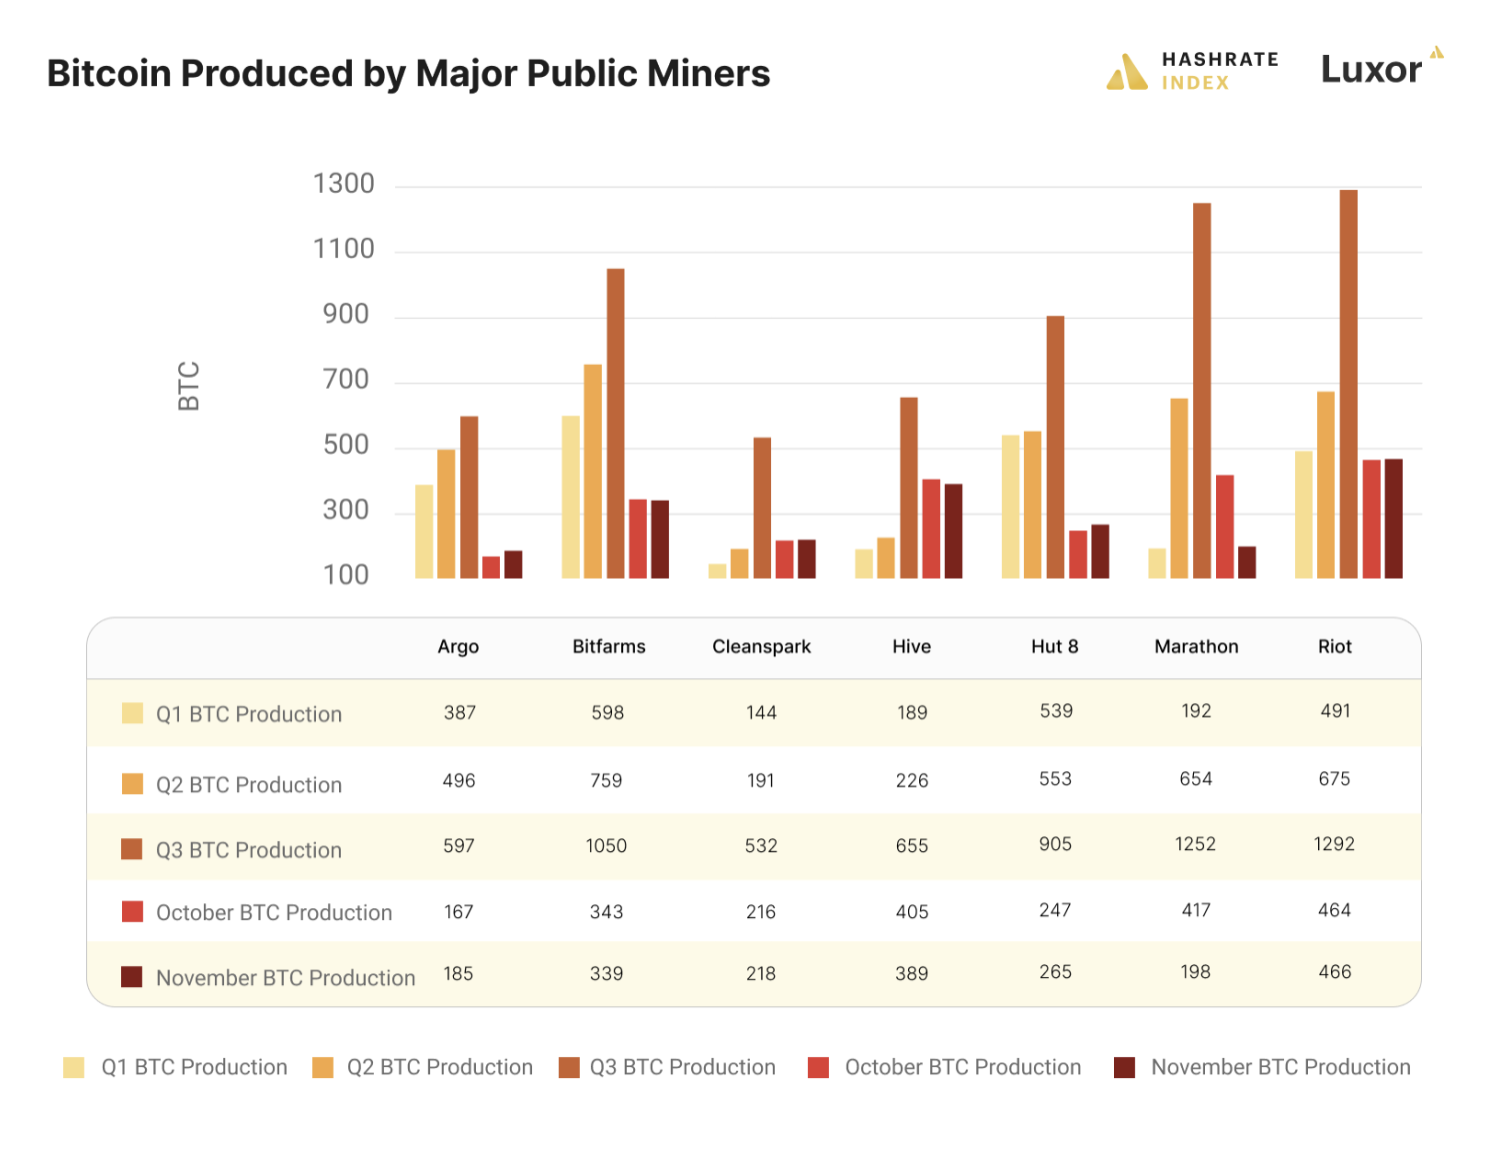 Public miner production for Q1, Q2, Q3, October, and November. Source: press releases, public filings